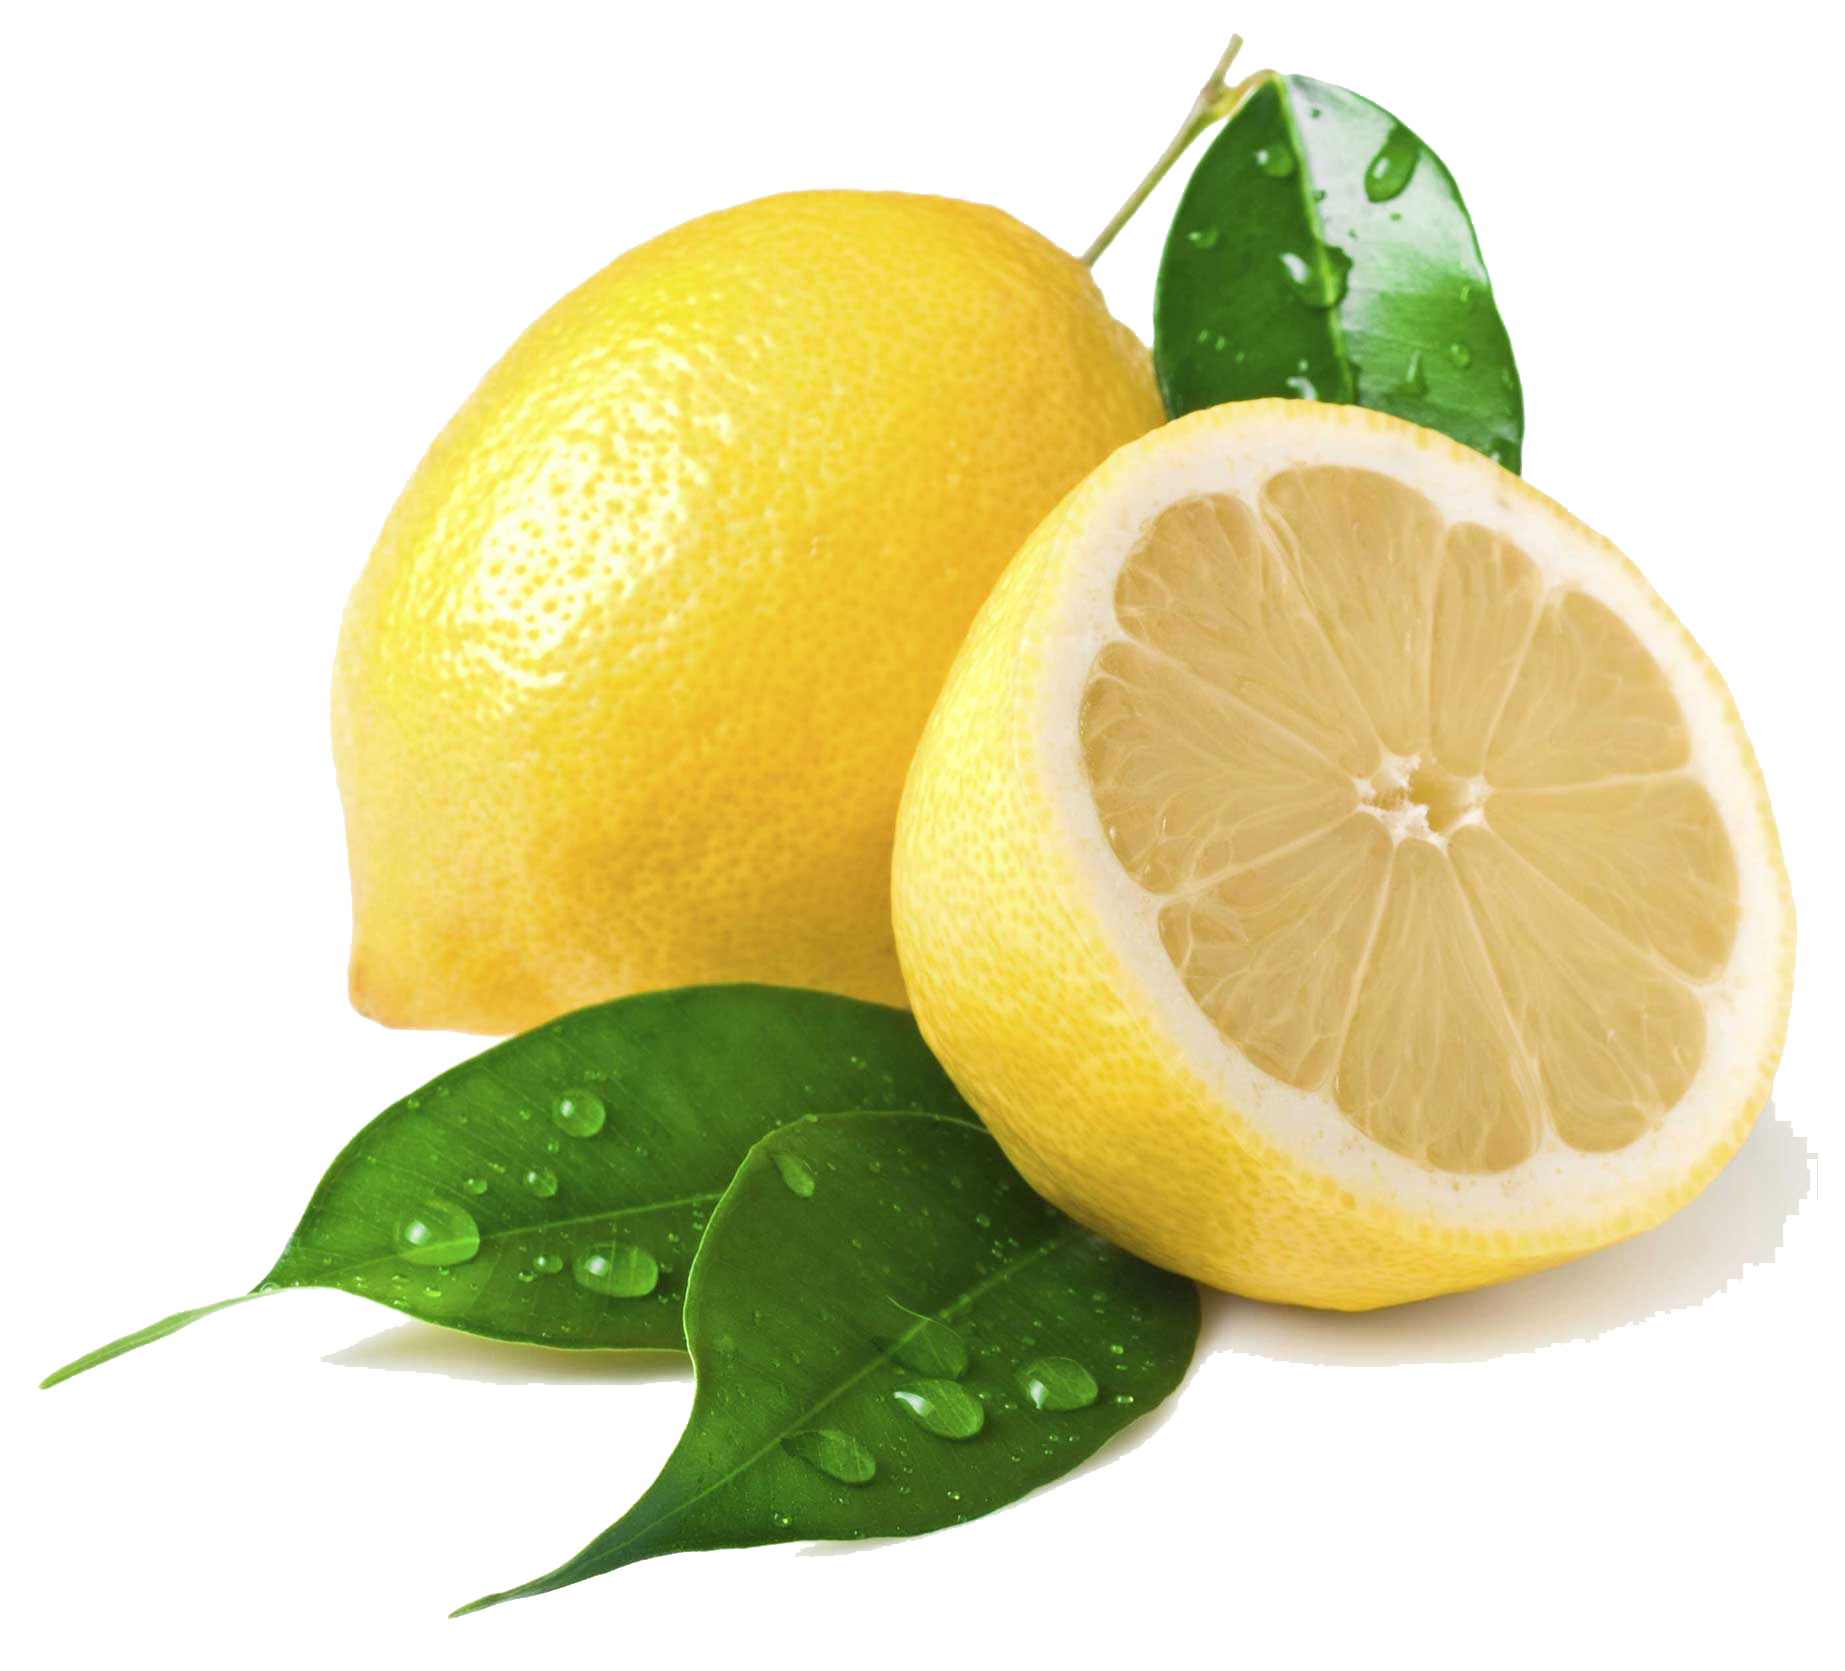 Lemon PNG HD | PNG All